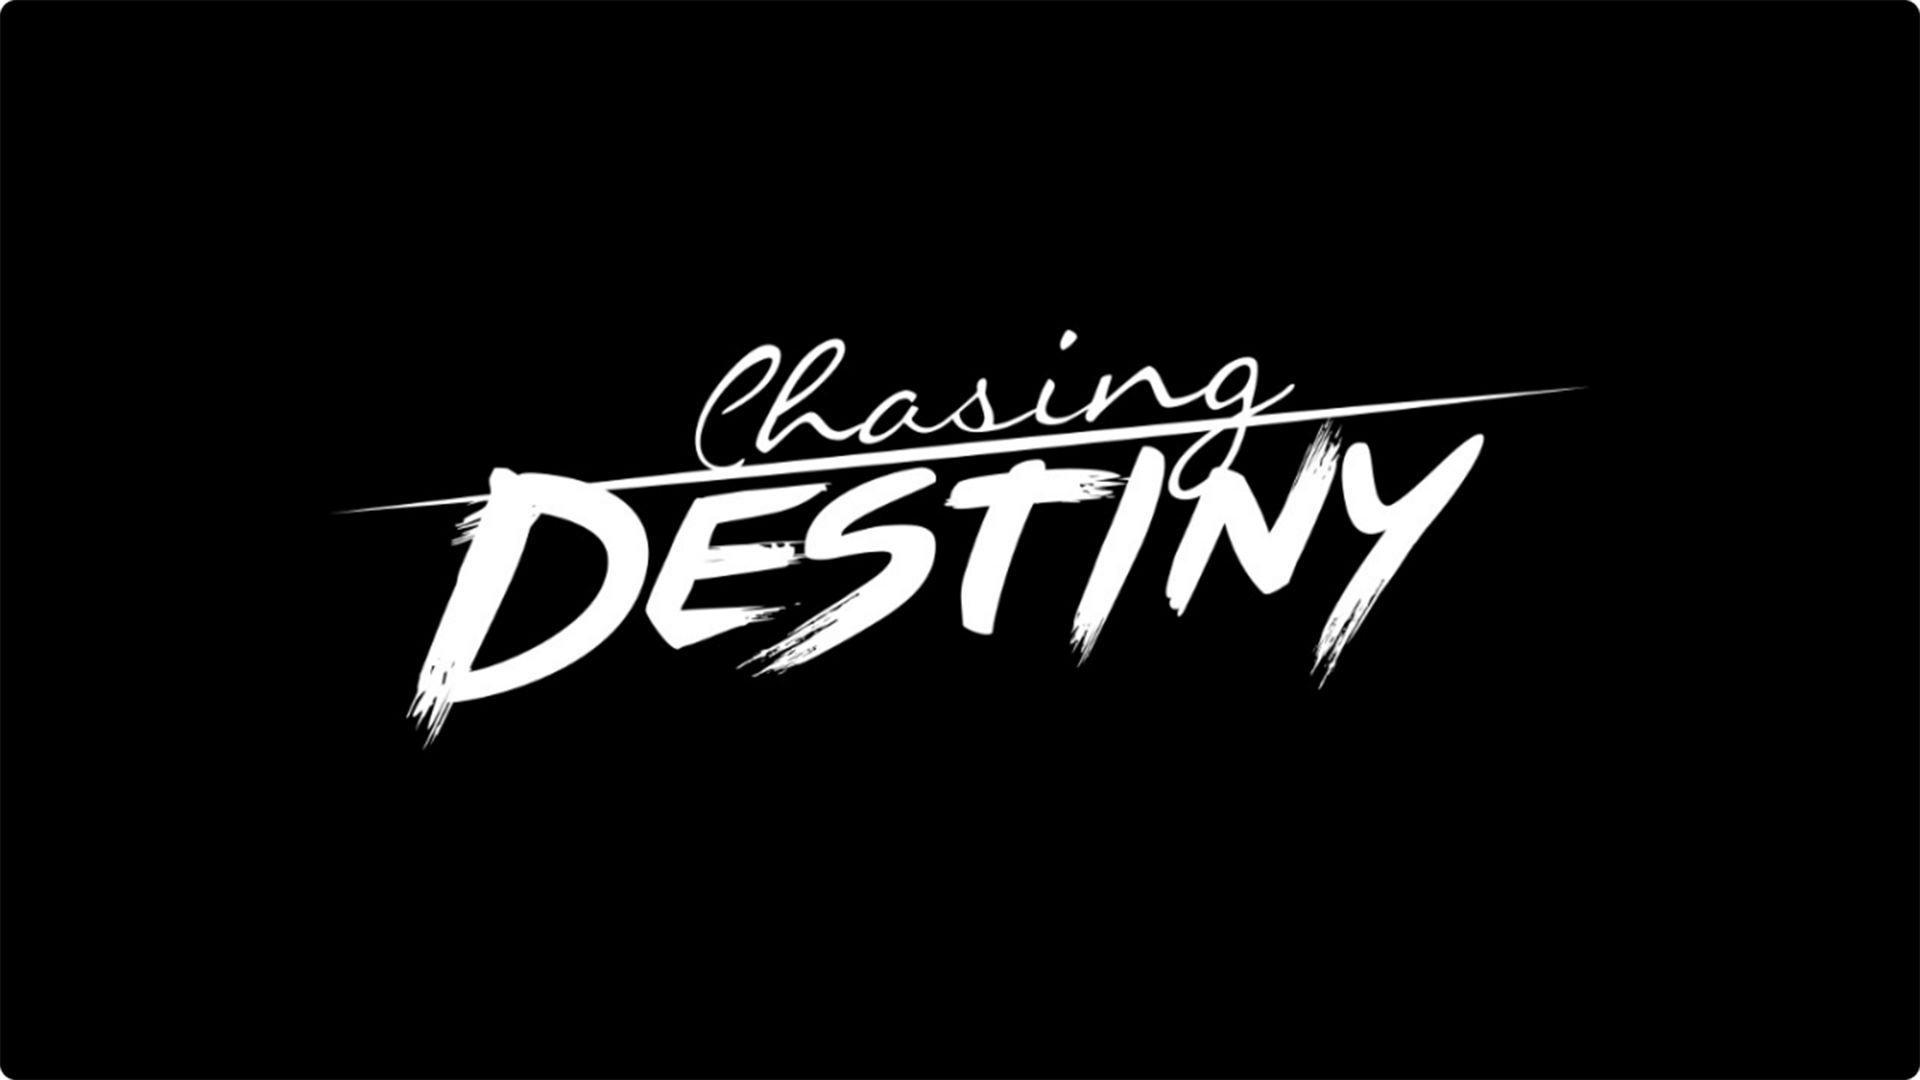 Chasing Destiny Backdrop